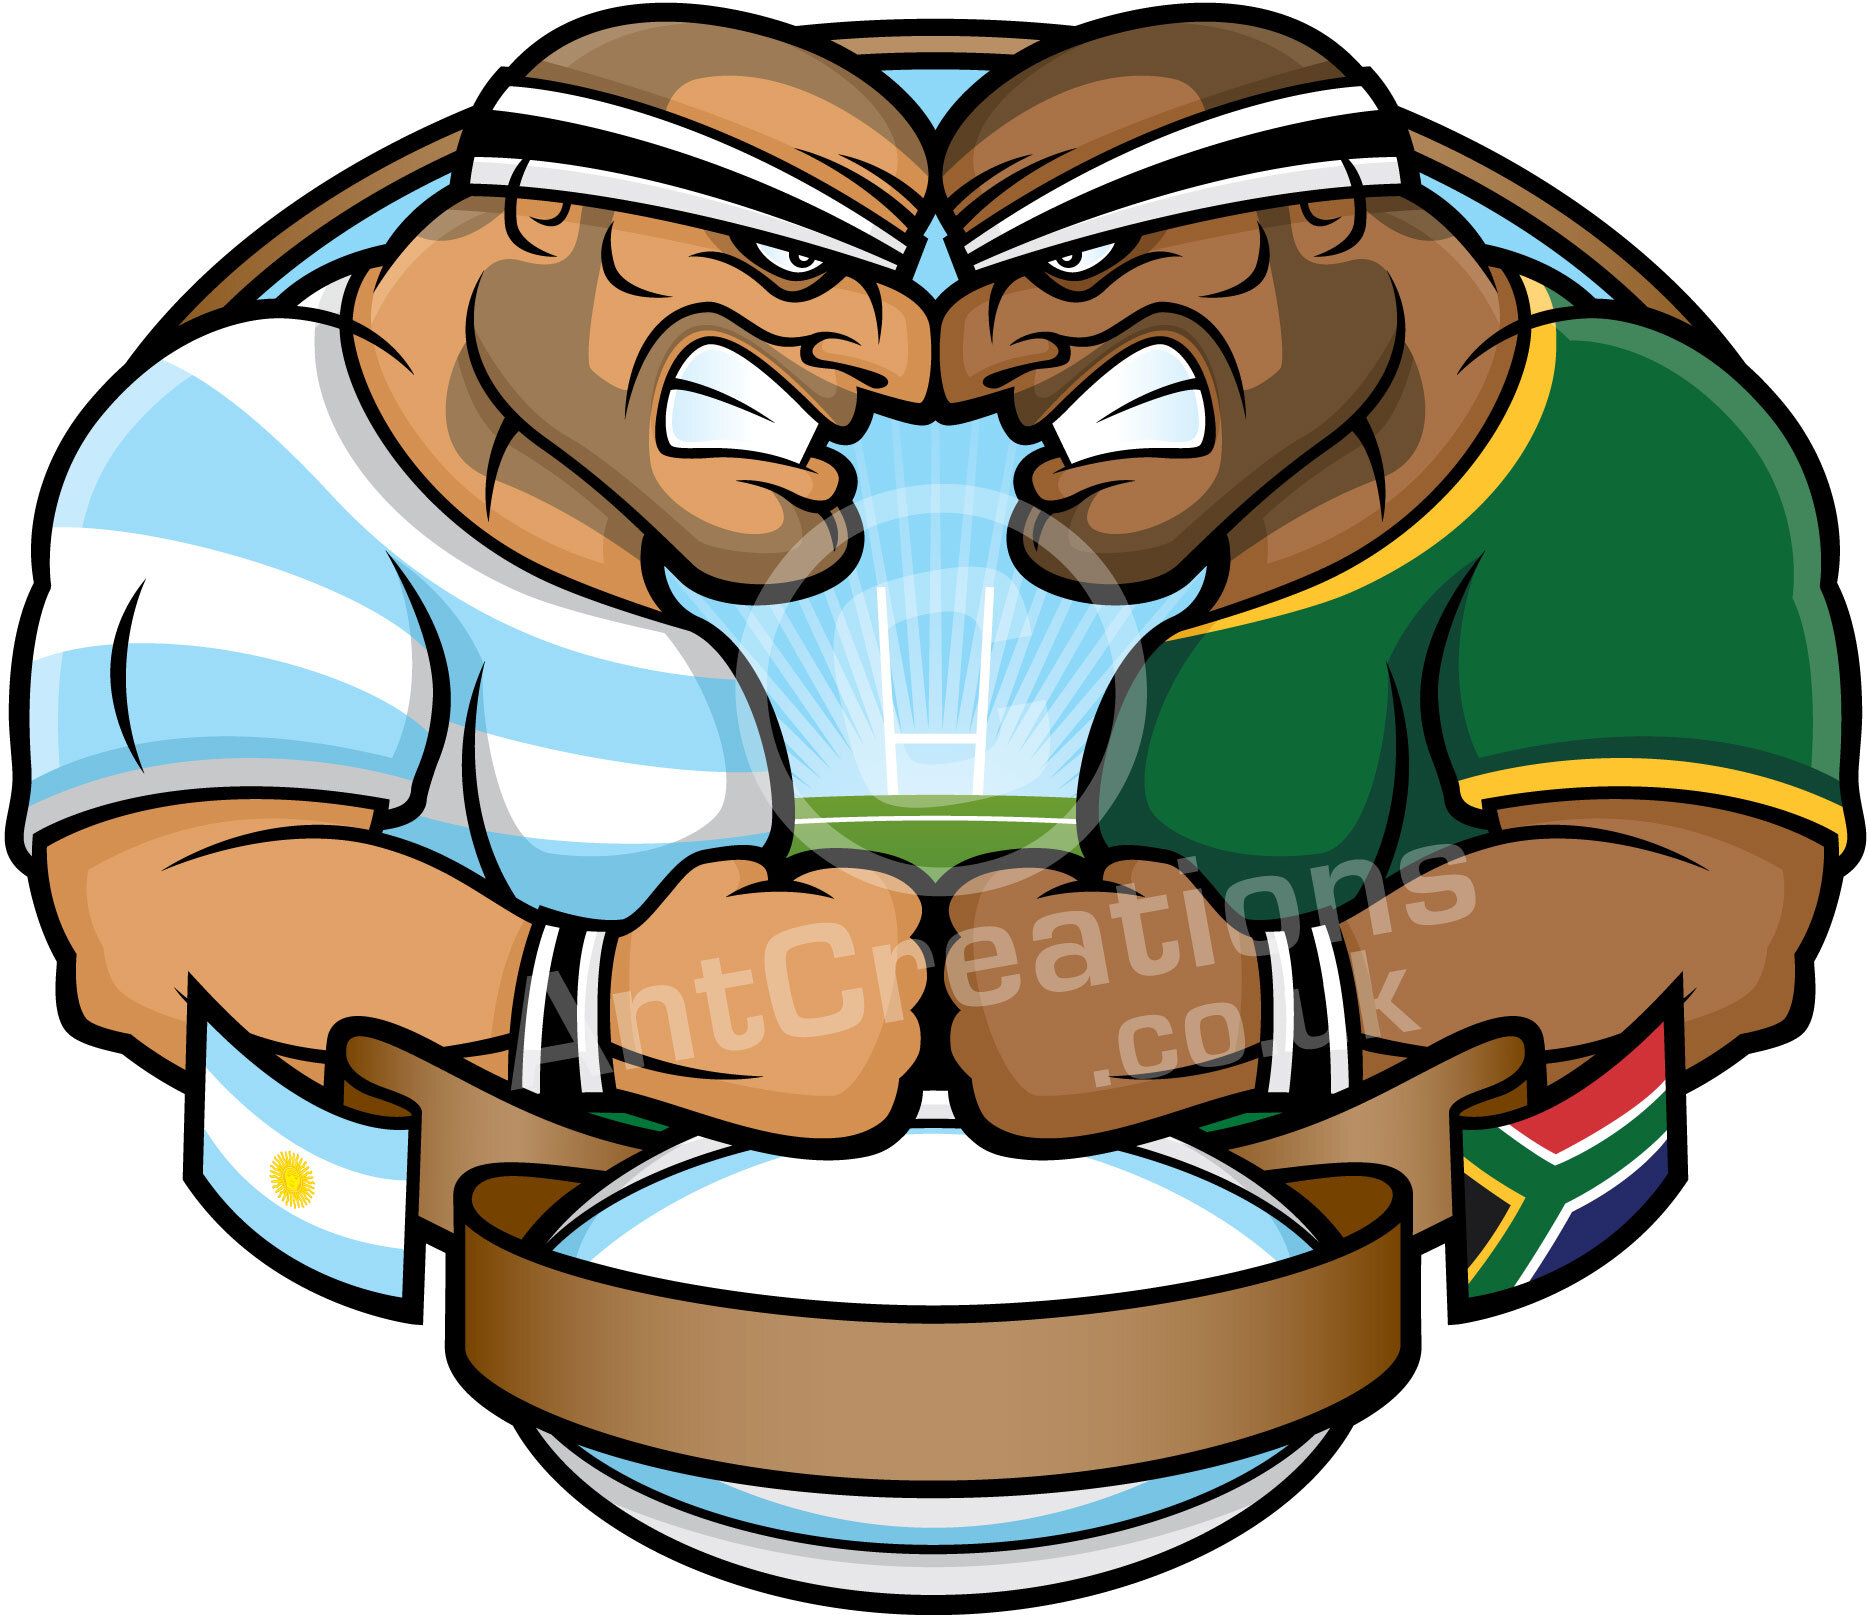 Rugby-Emblem-ArgvsSA.jpg